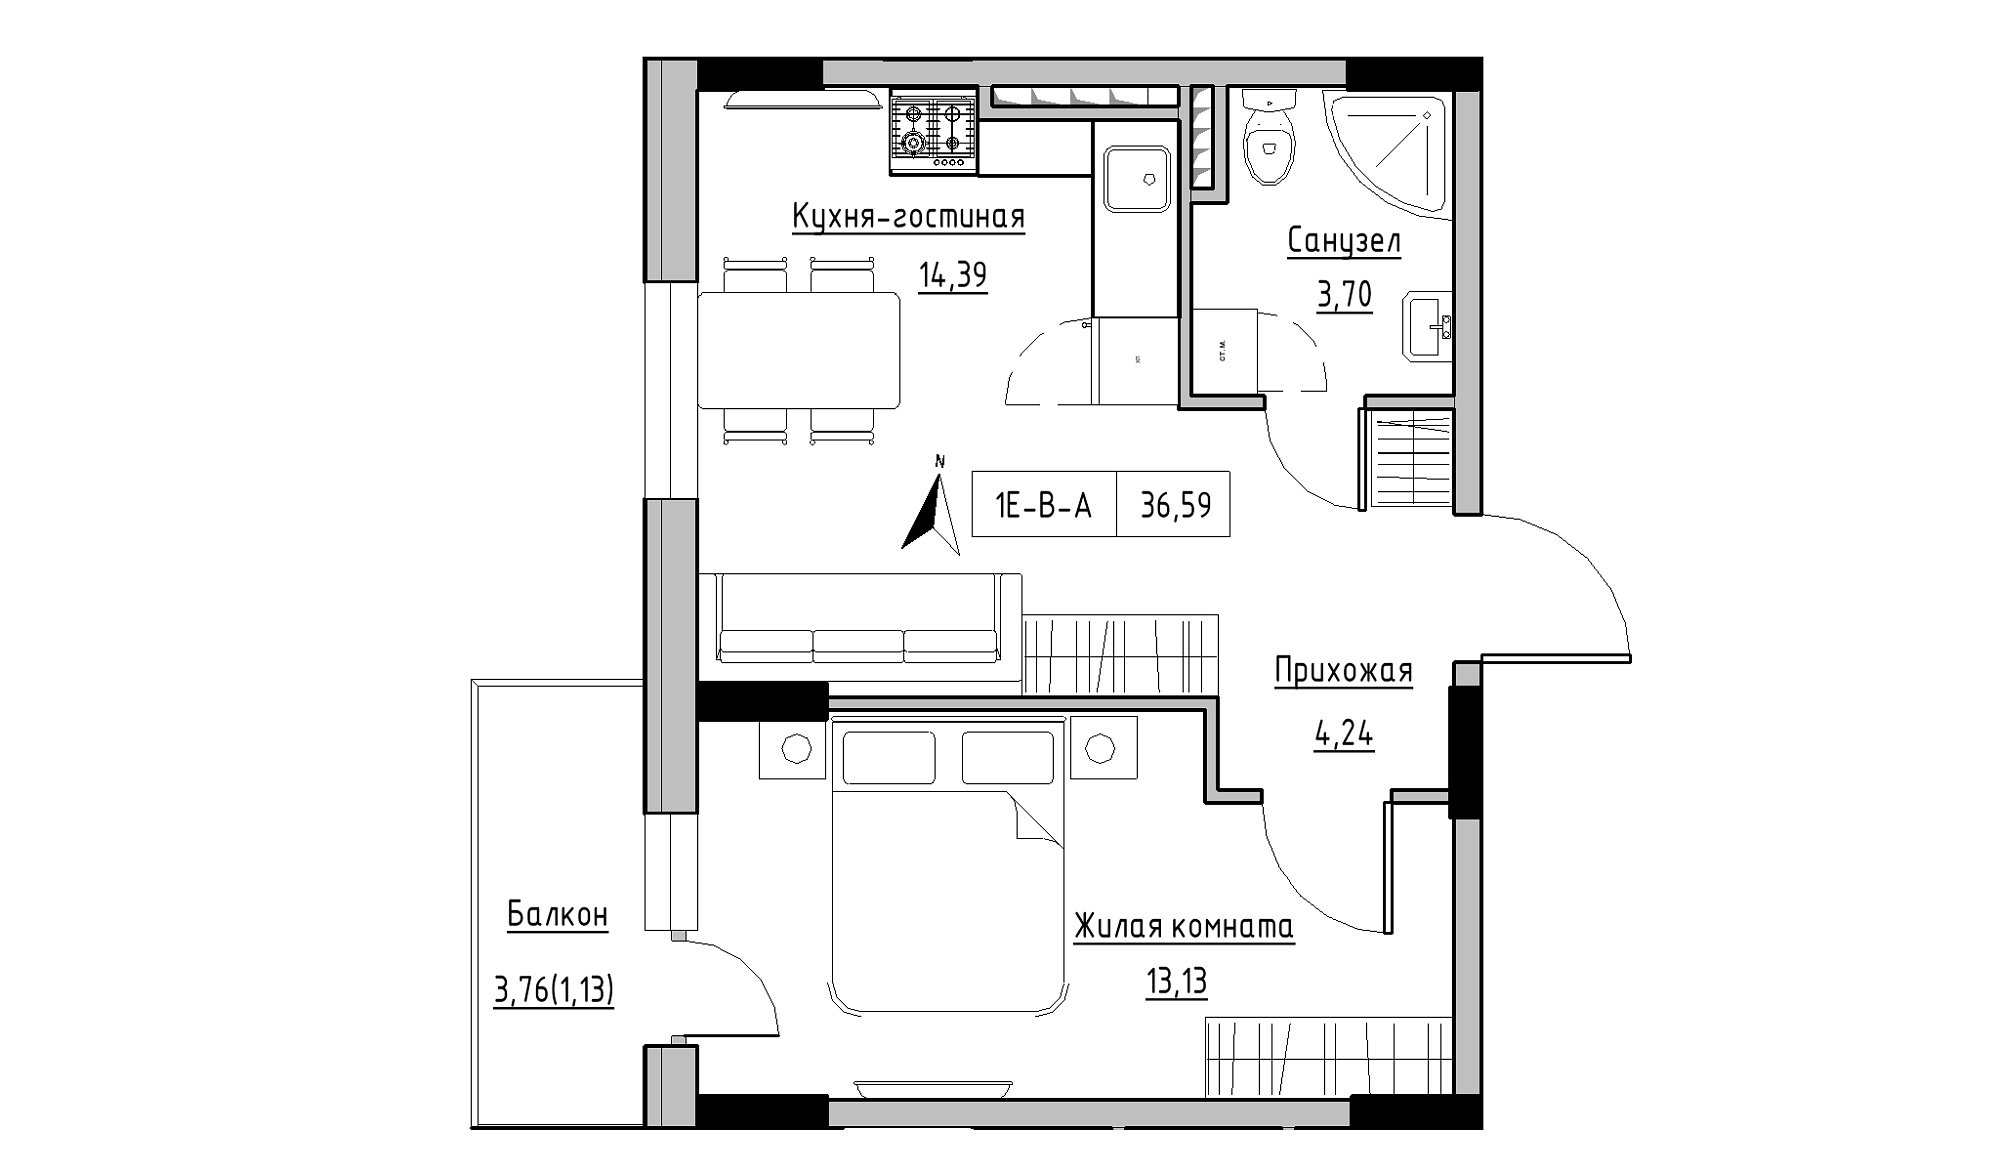 Planning 1-rm flats area 36.59m2, KS-025-04/0004.